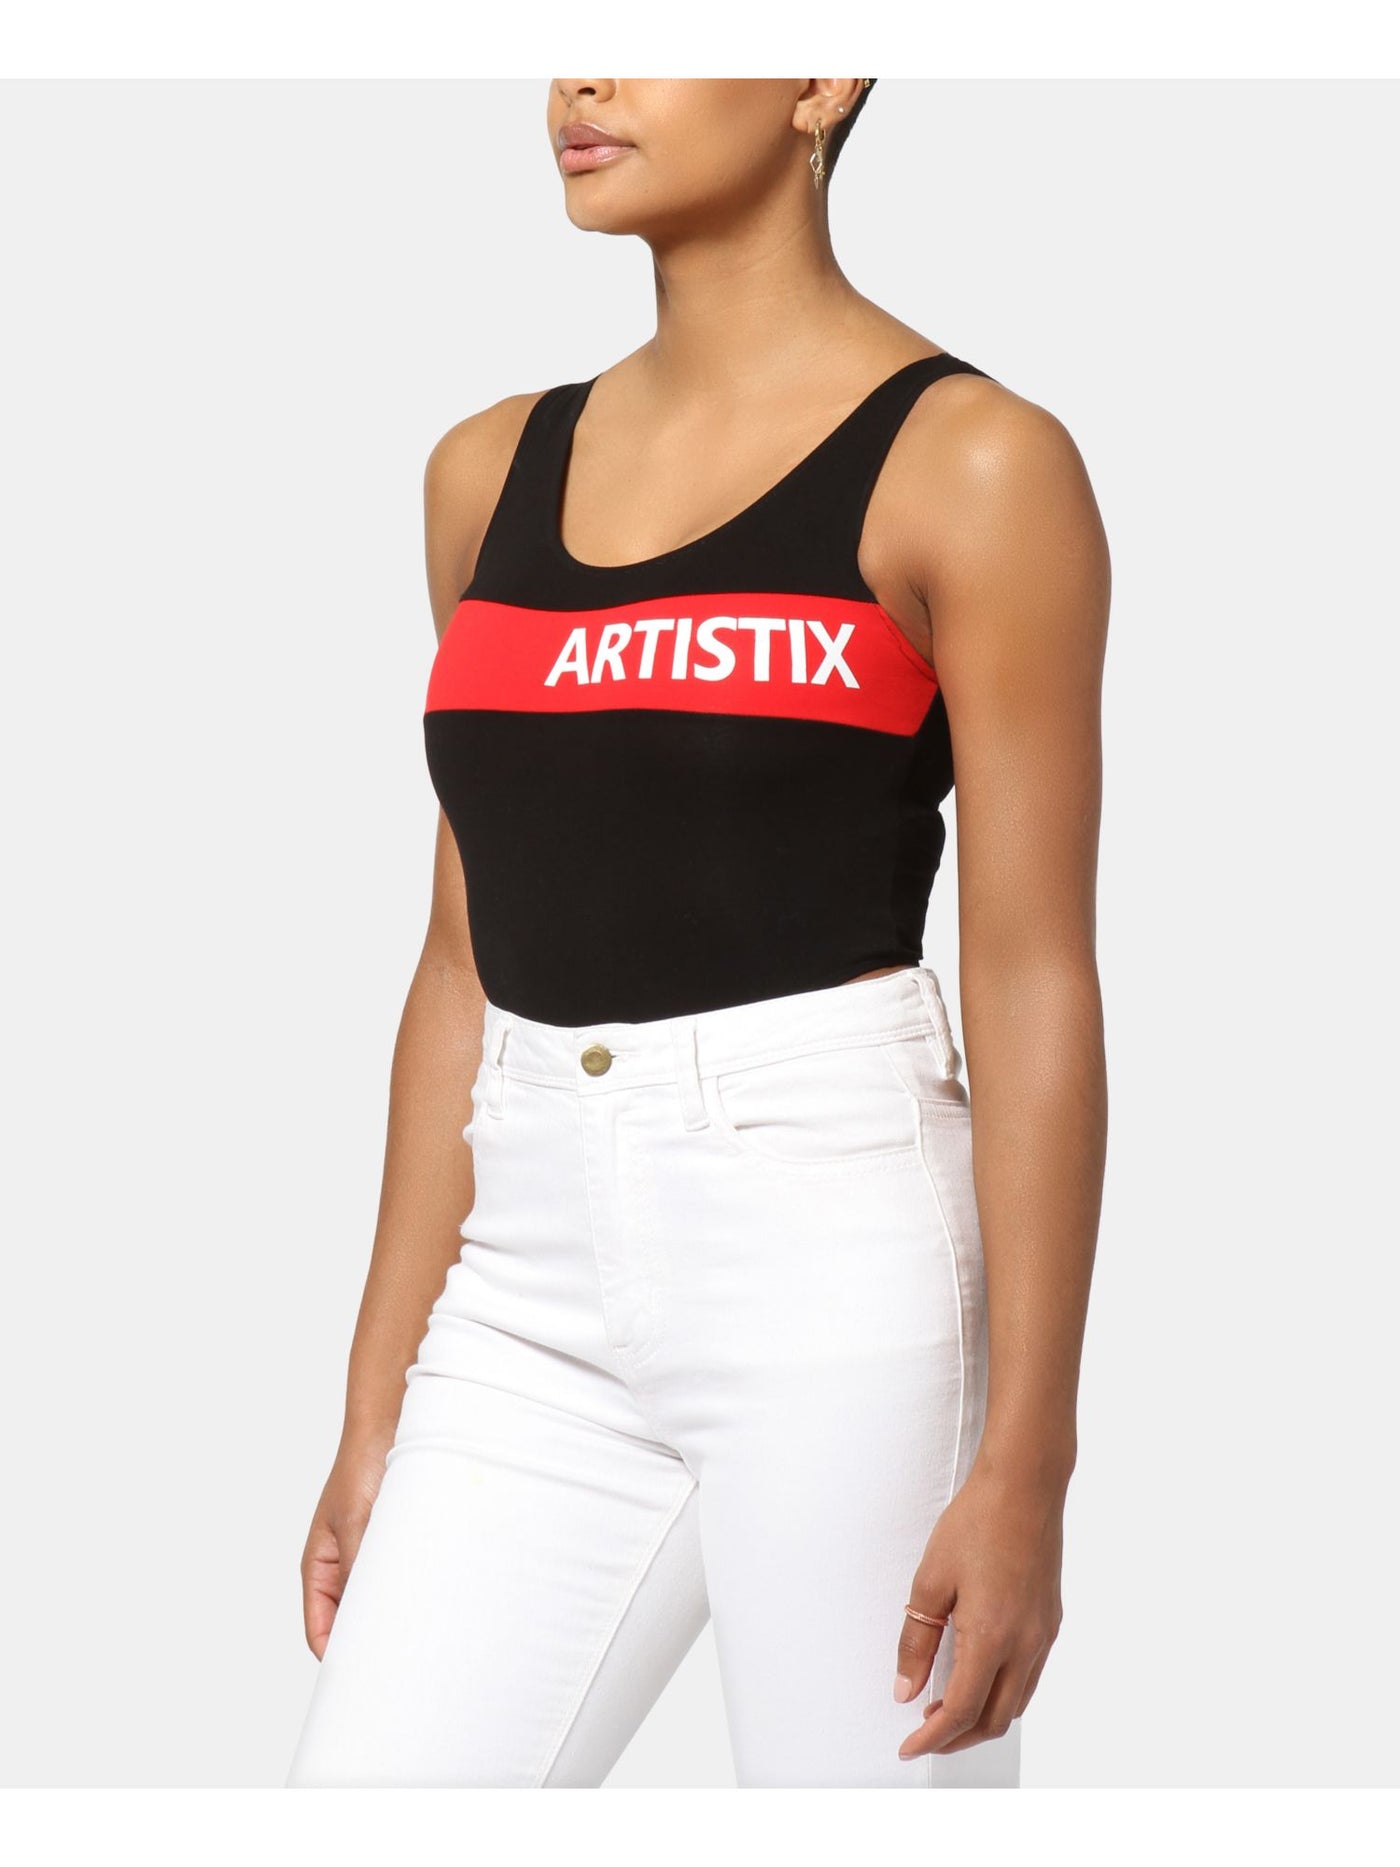 ARTISTIX Womens Black Printed Sleeveless Scoop Neck Tank Top S